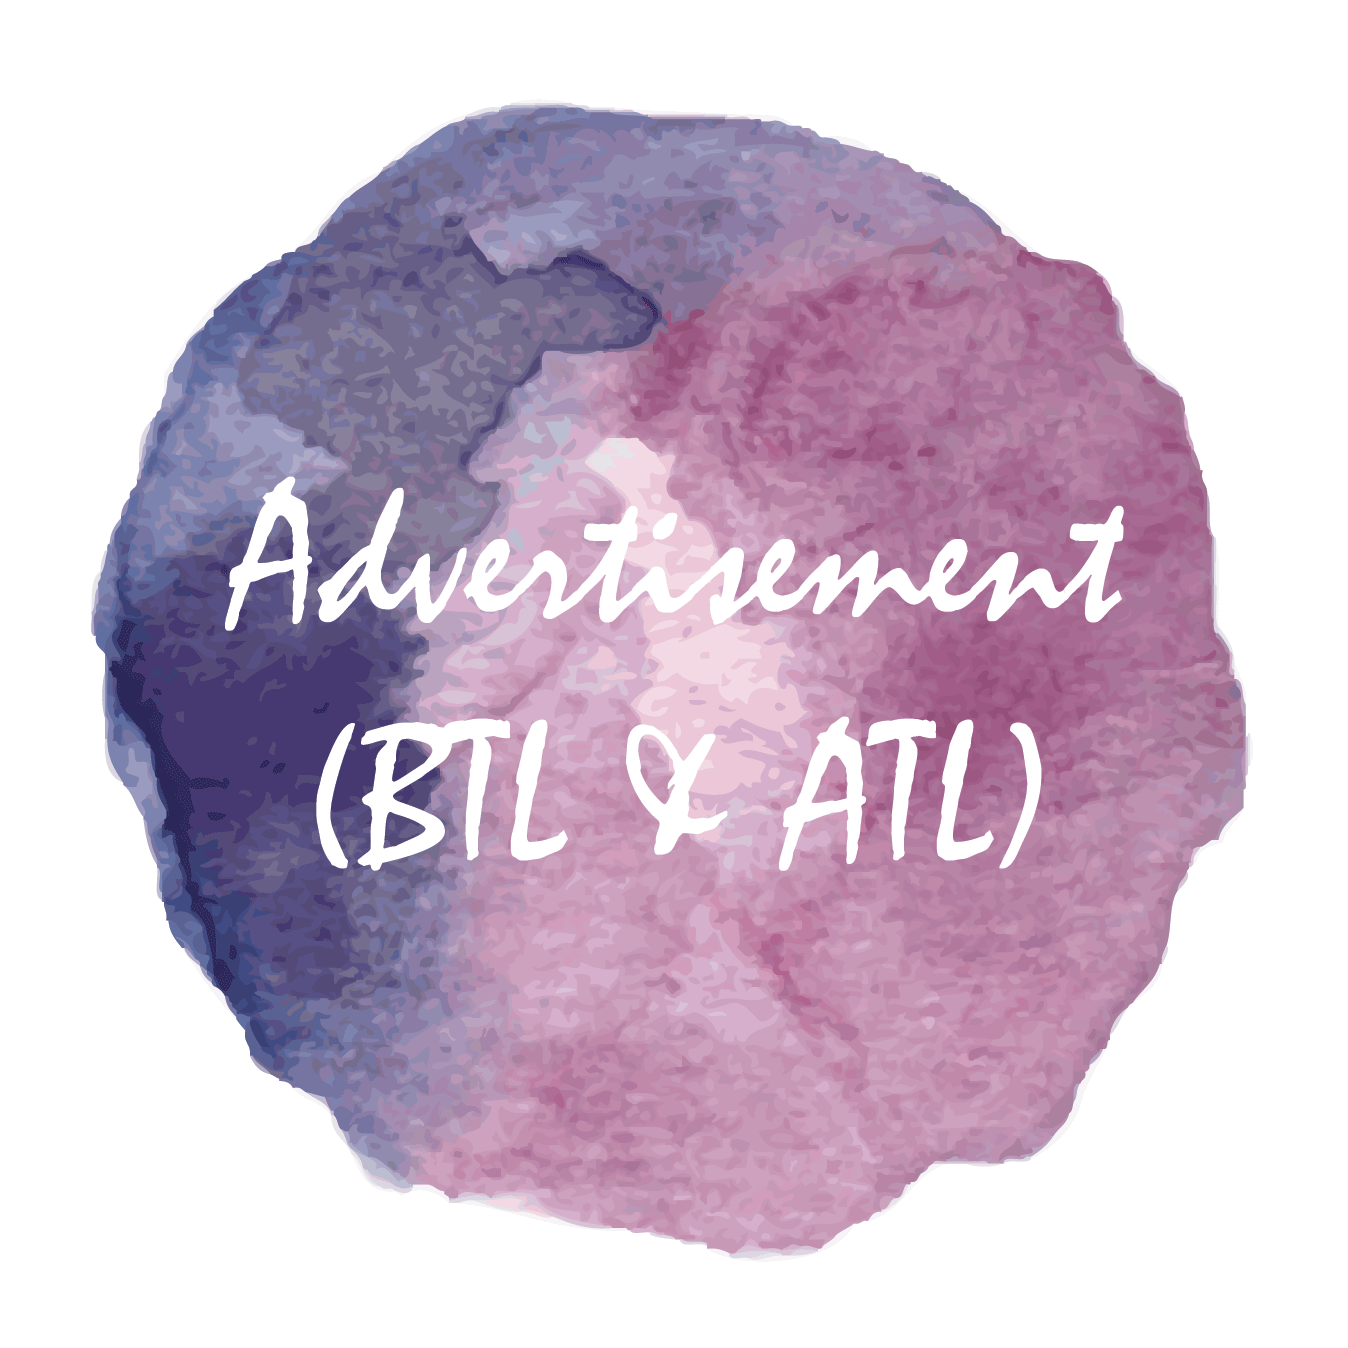 Advertisement (BTL and ATL)